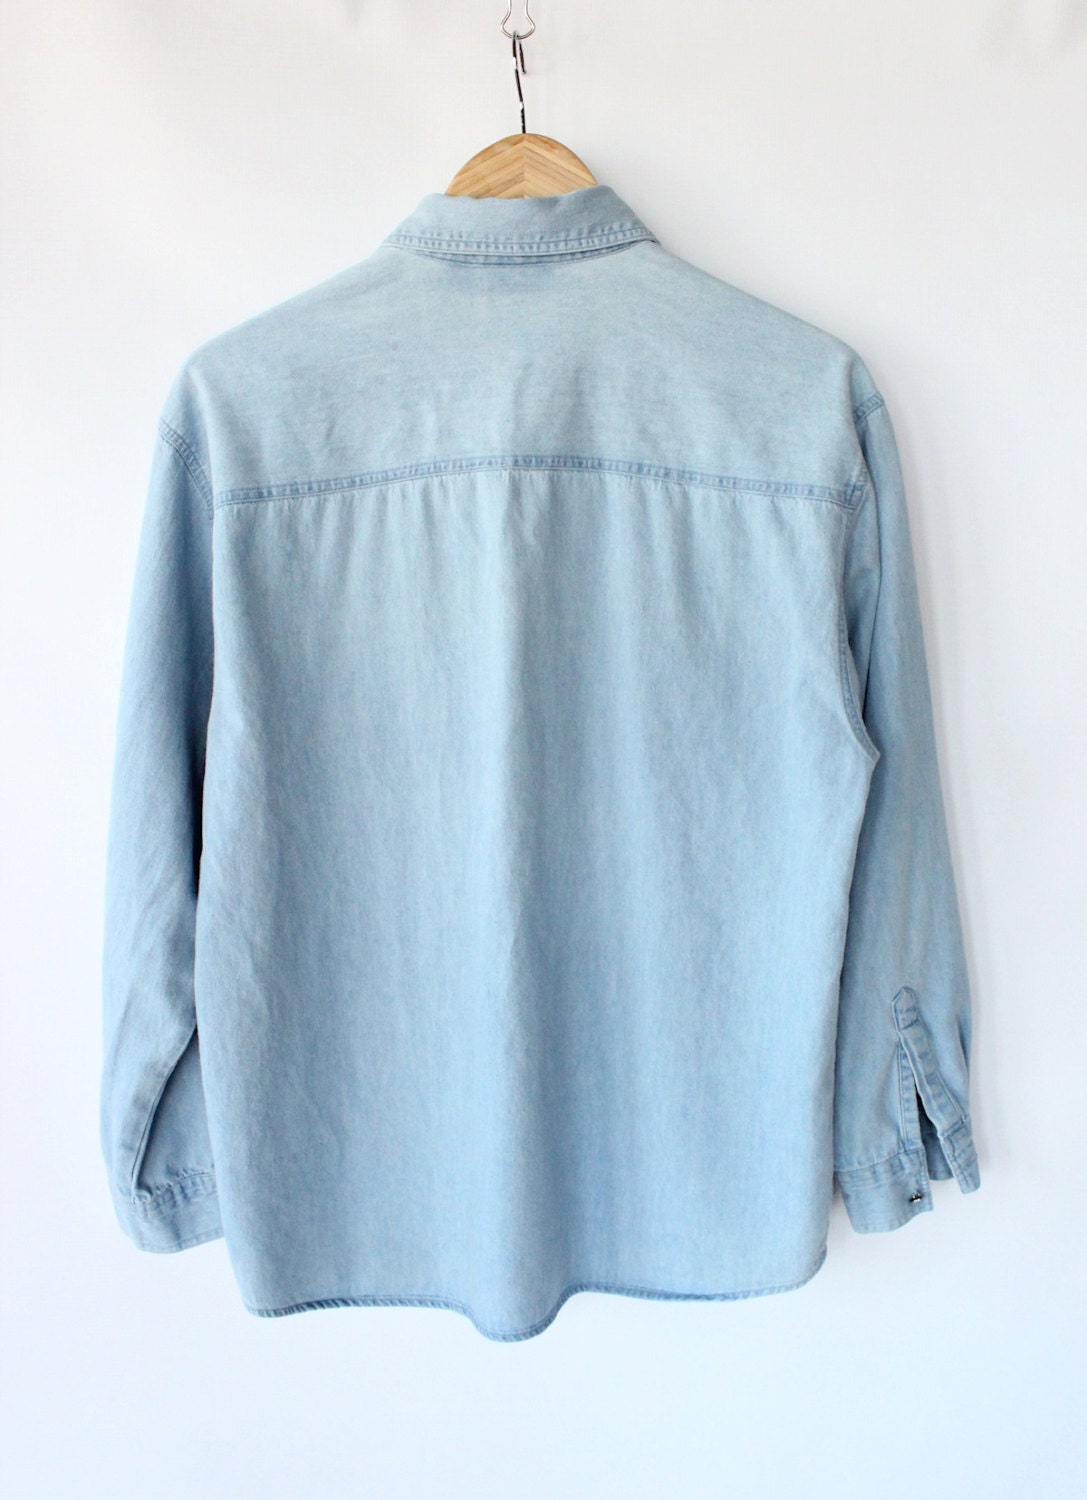 Vintage 80s Light Blue Jean Button Up Shirt // Women's